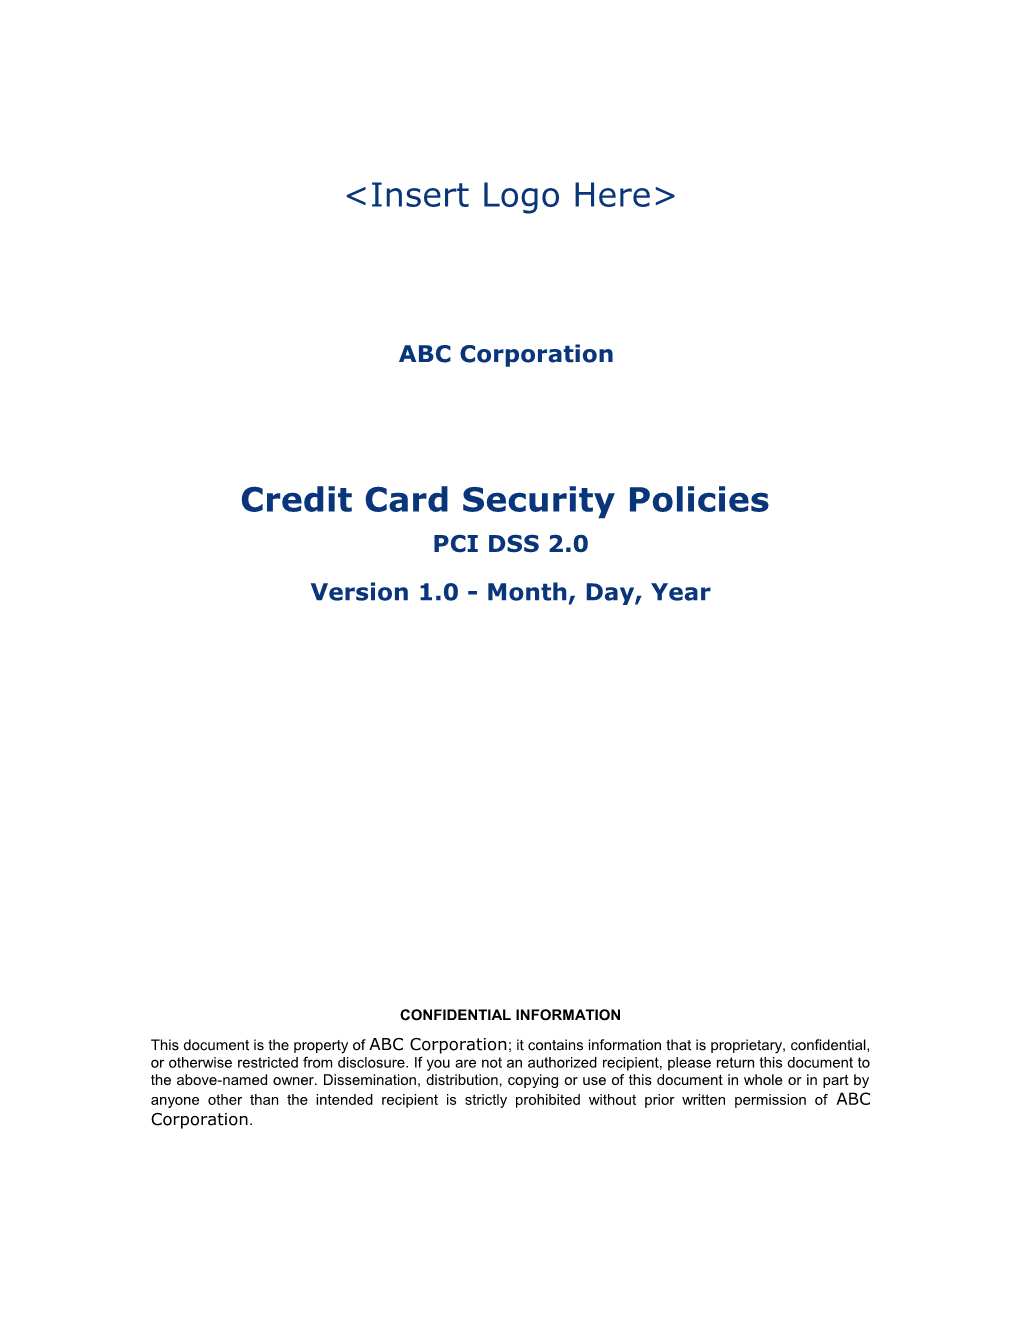 Credit Card Security Policies